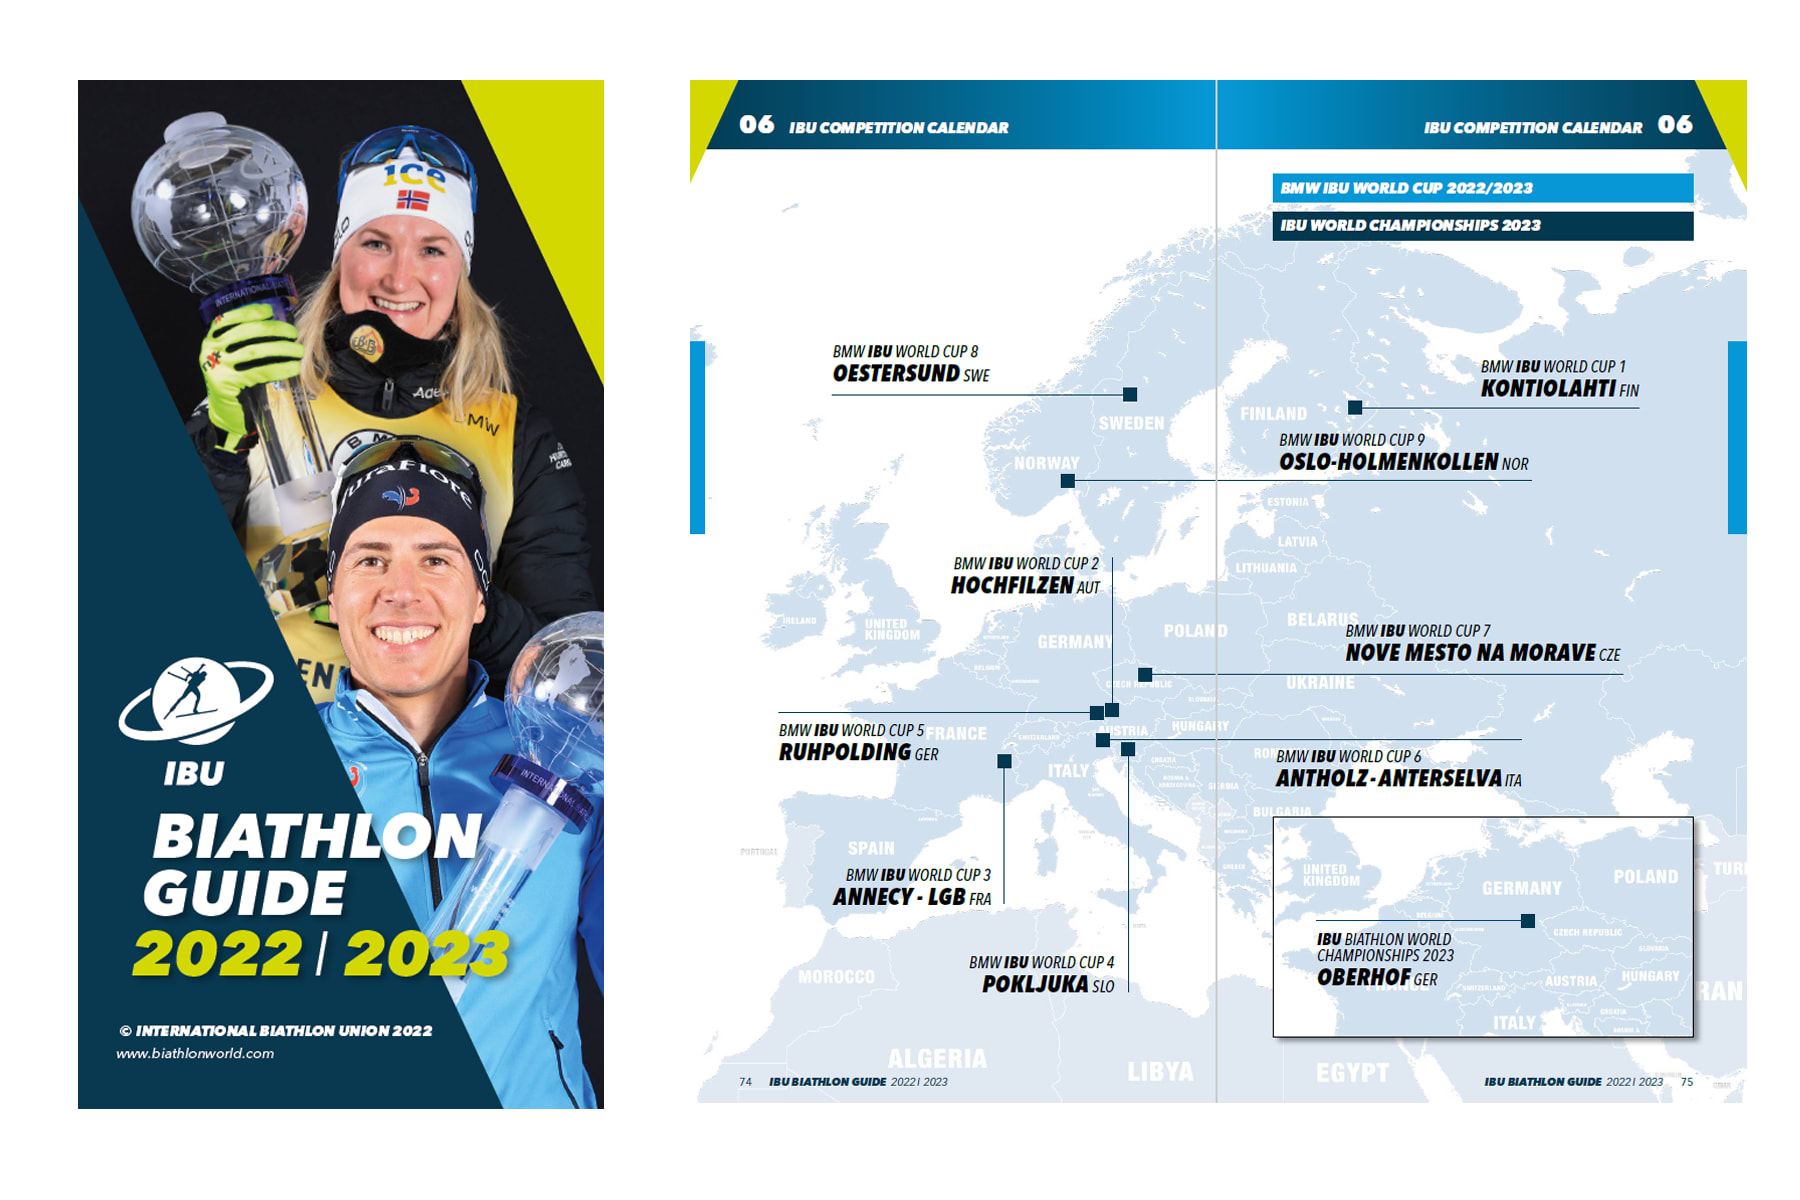 IBU Biathlon Guide 2022/2023